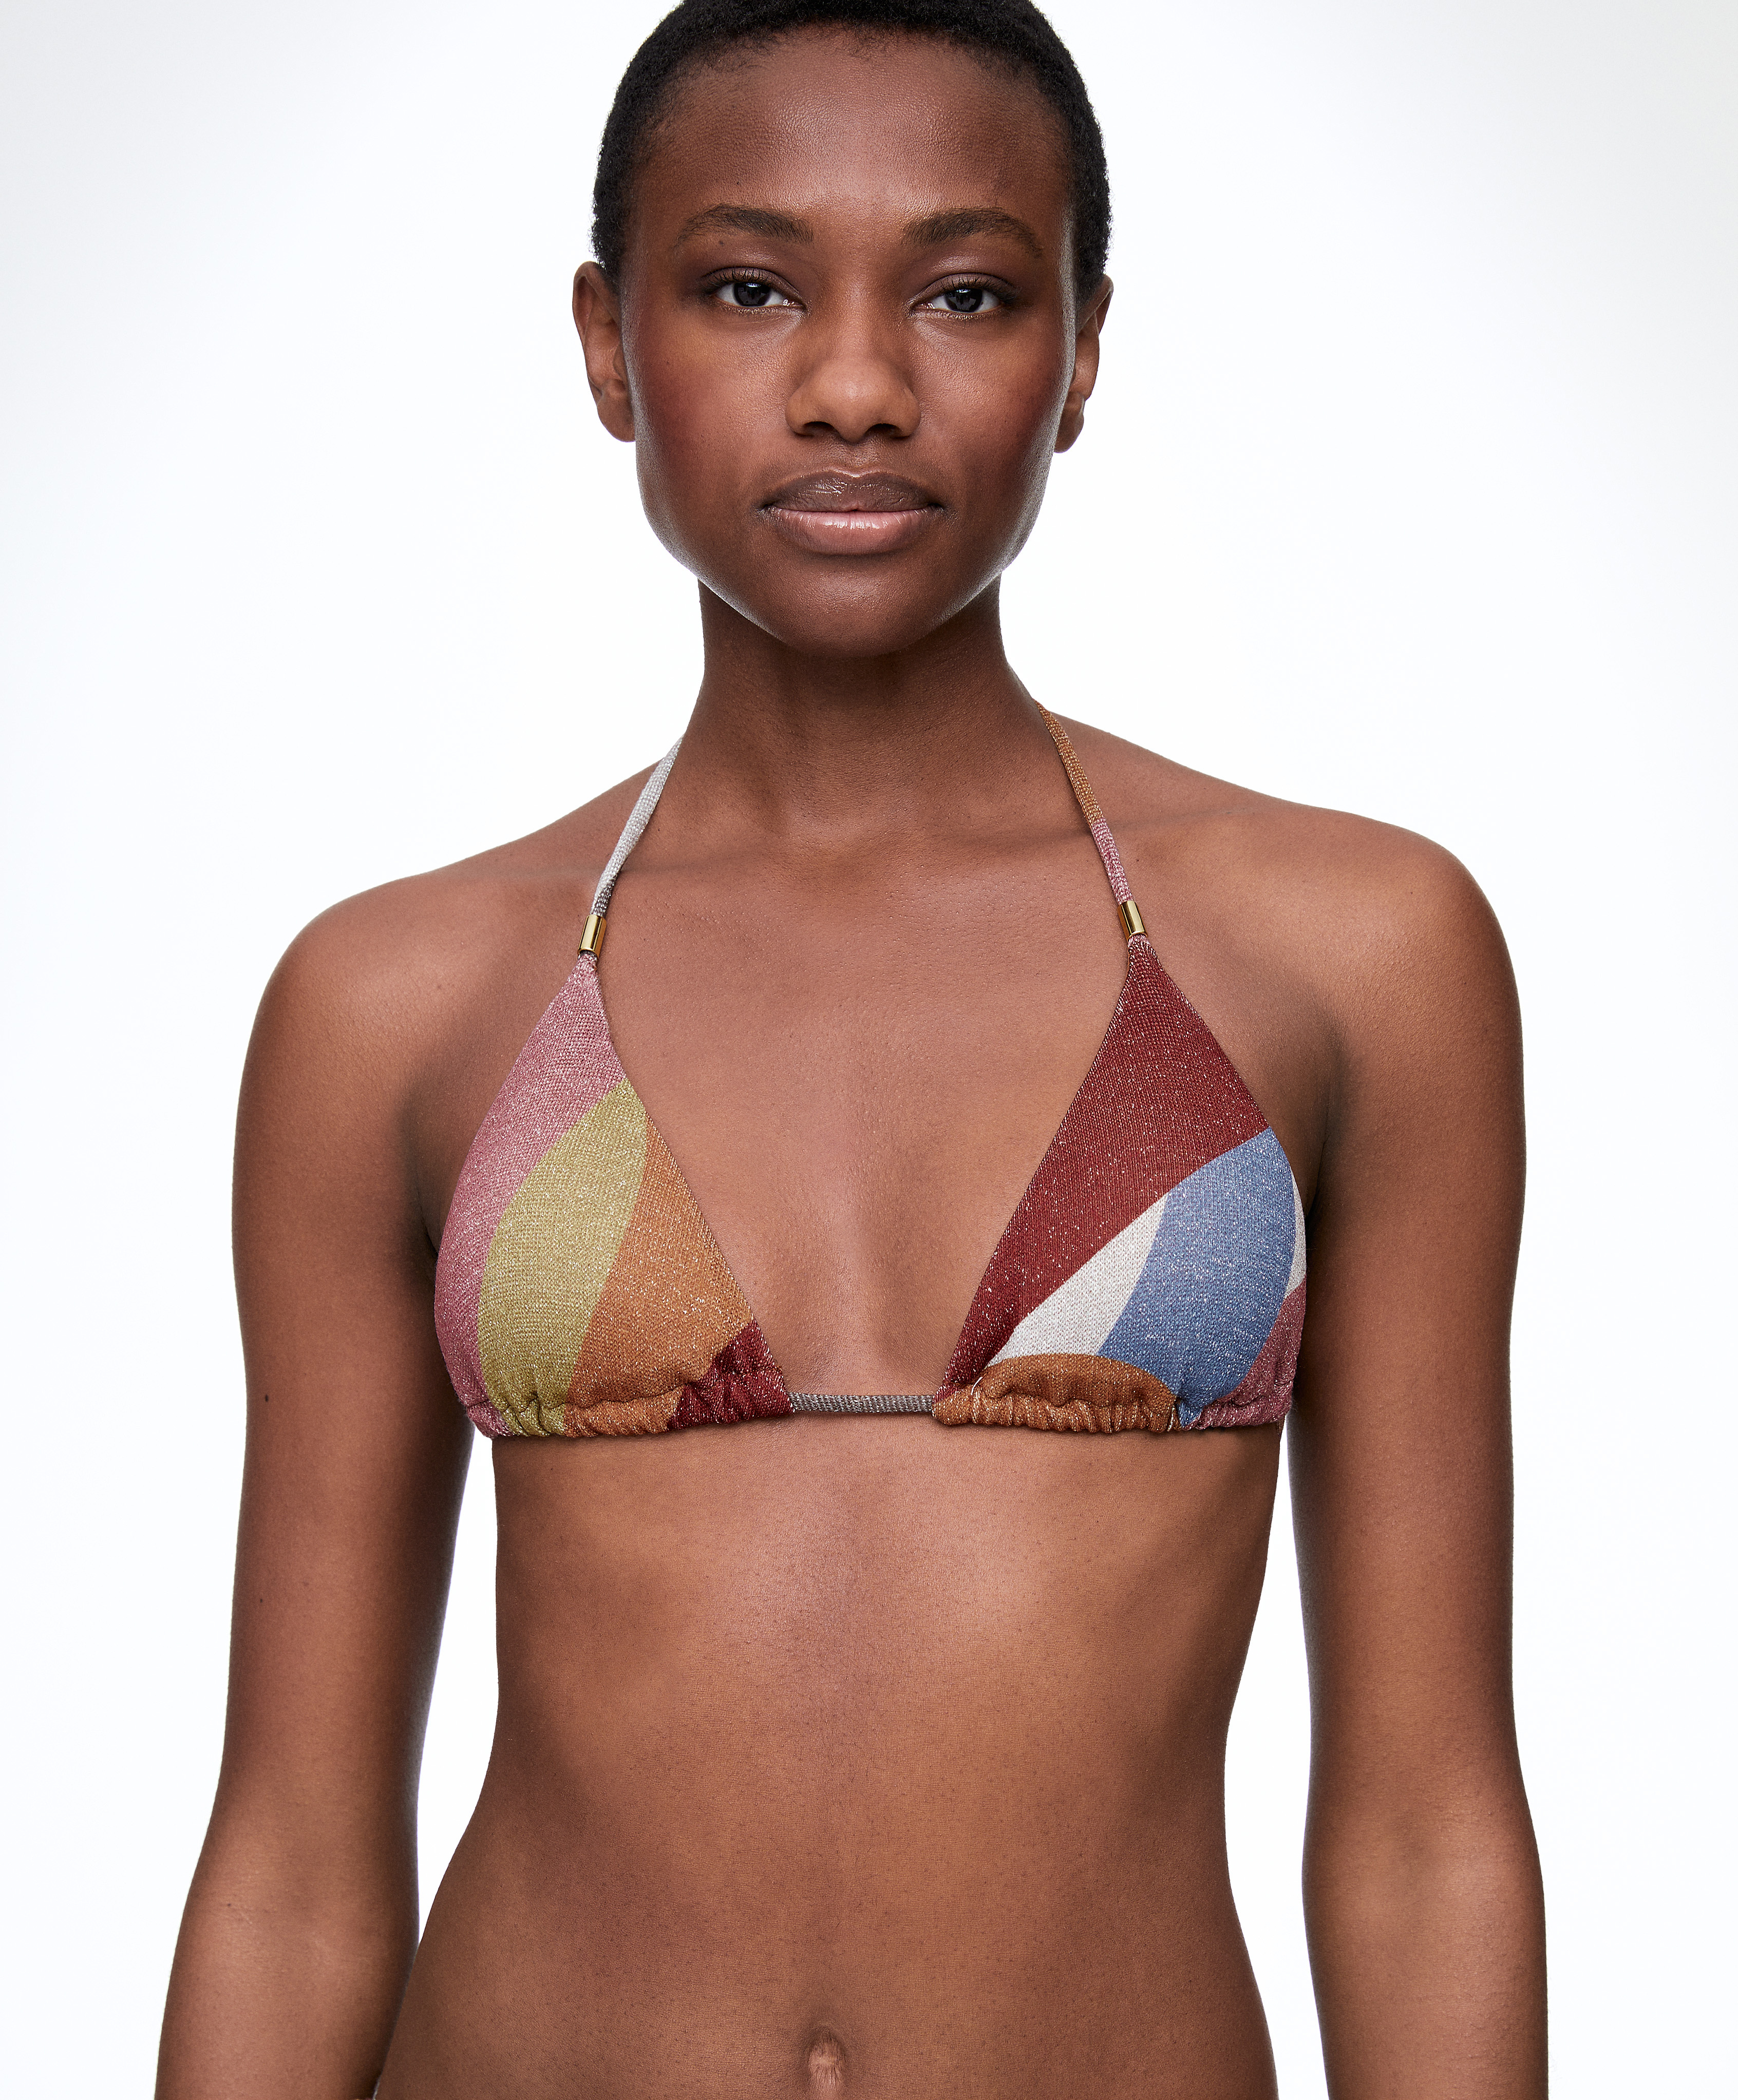 Sparkly jacquard triangle bikini top